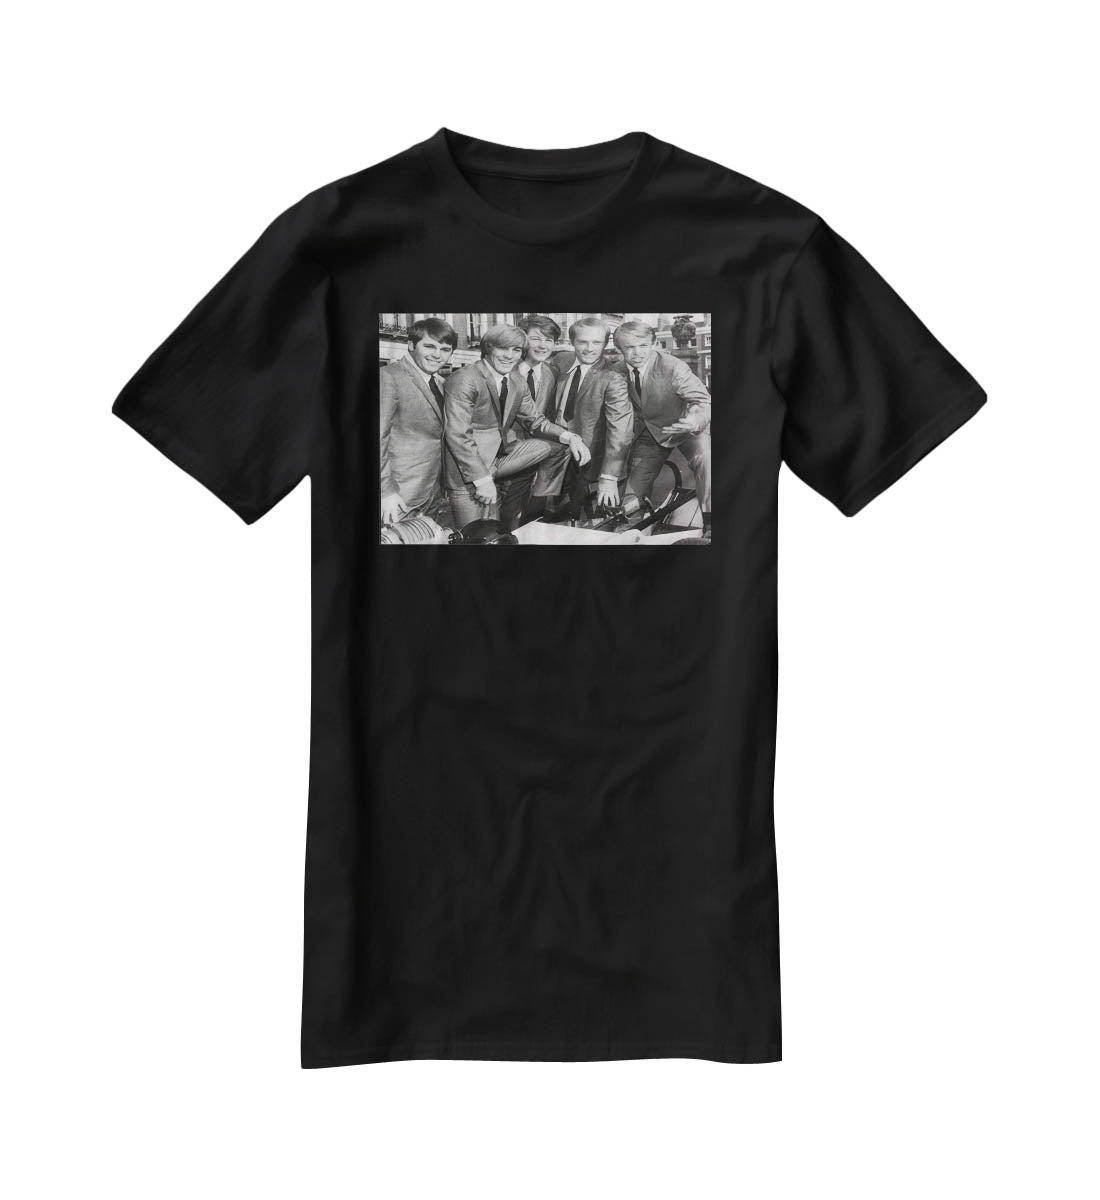 Beach Boys in suits T-Shirt - Canvas Art Rocks - 1